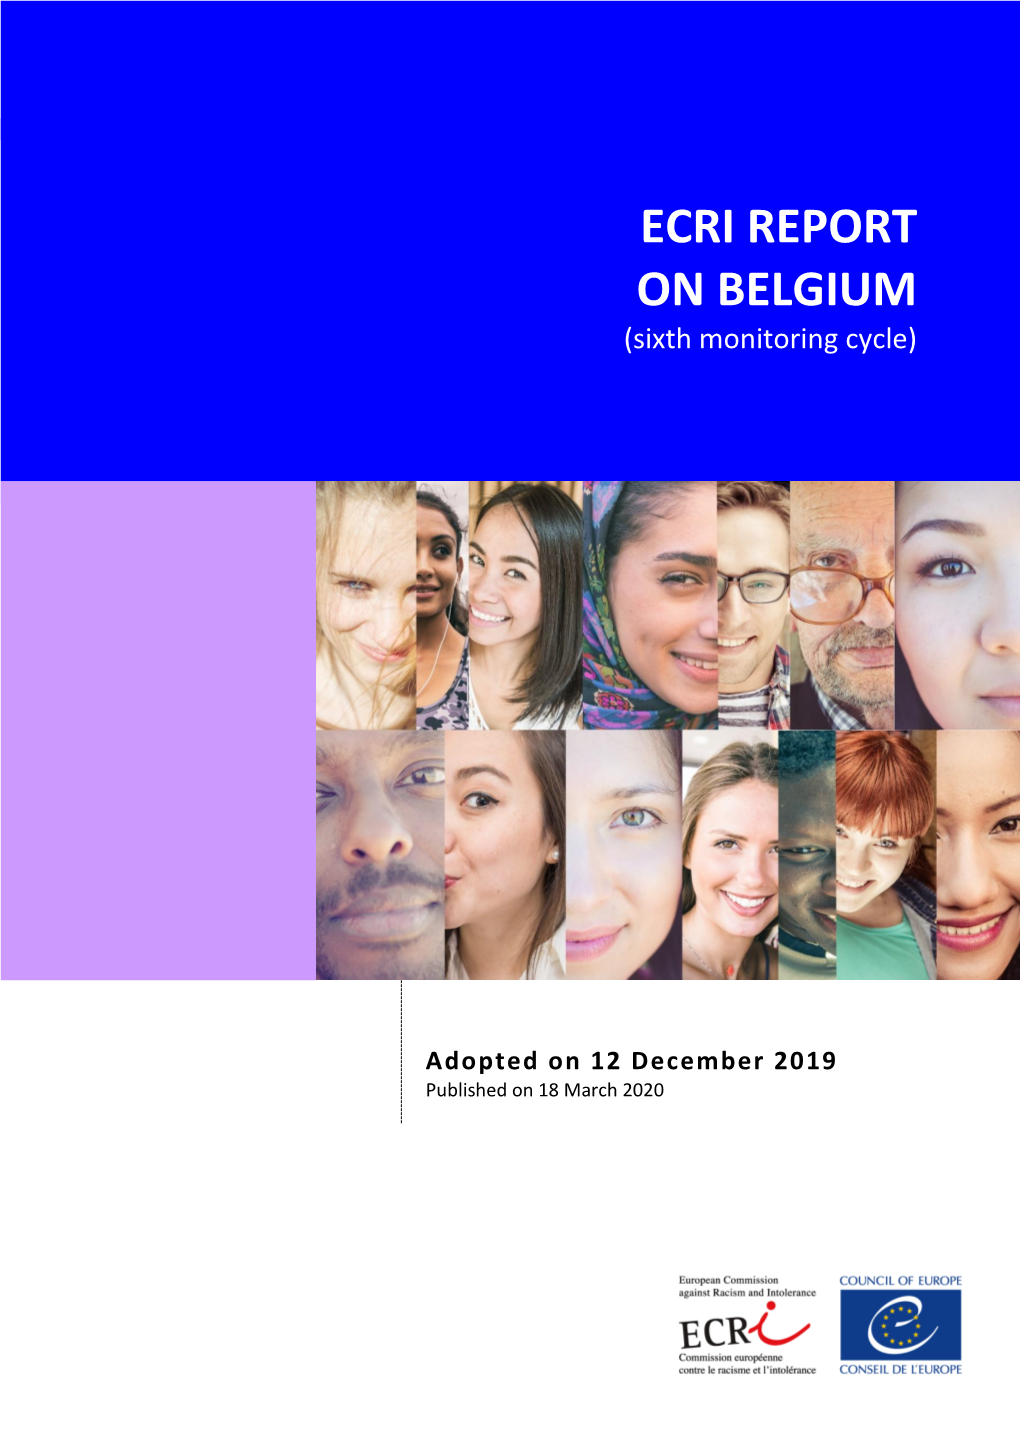 ECRI REPORT on BELGIUM (Sixth Monitoring Cycle)